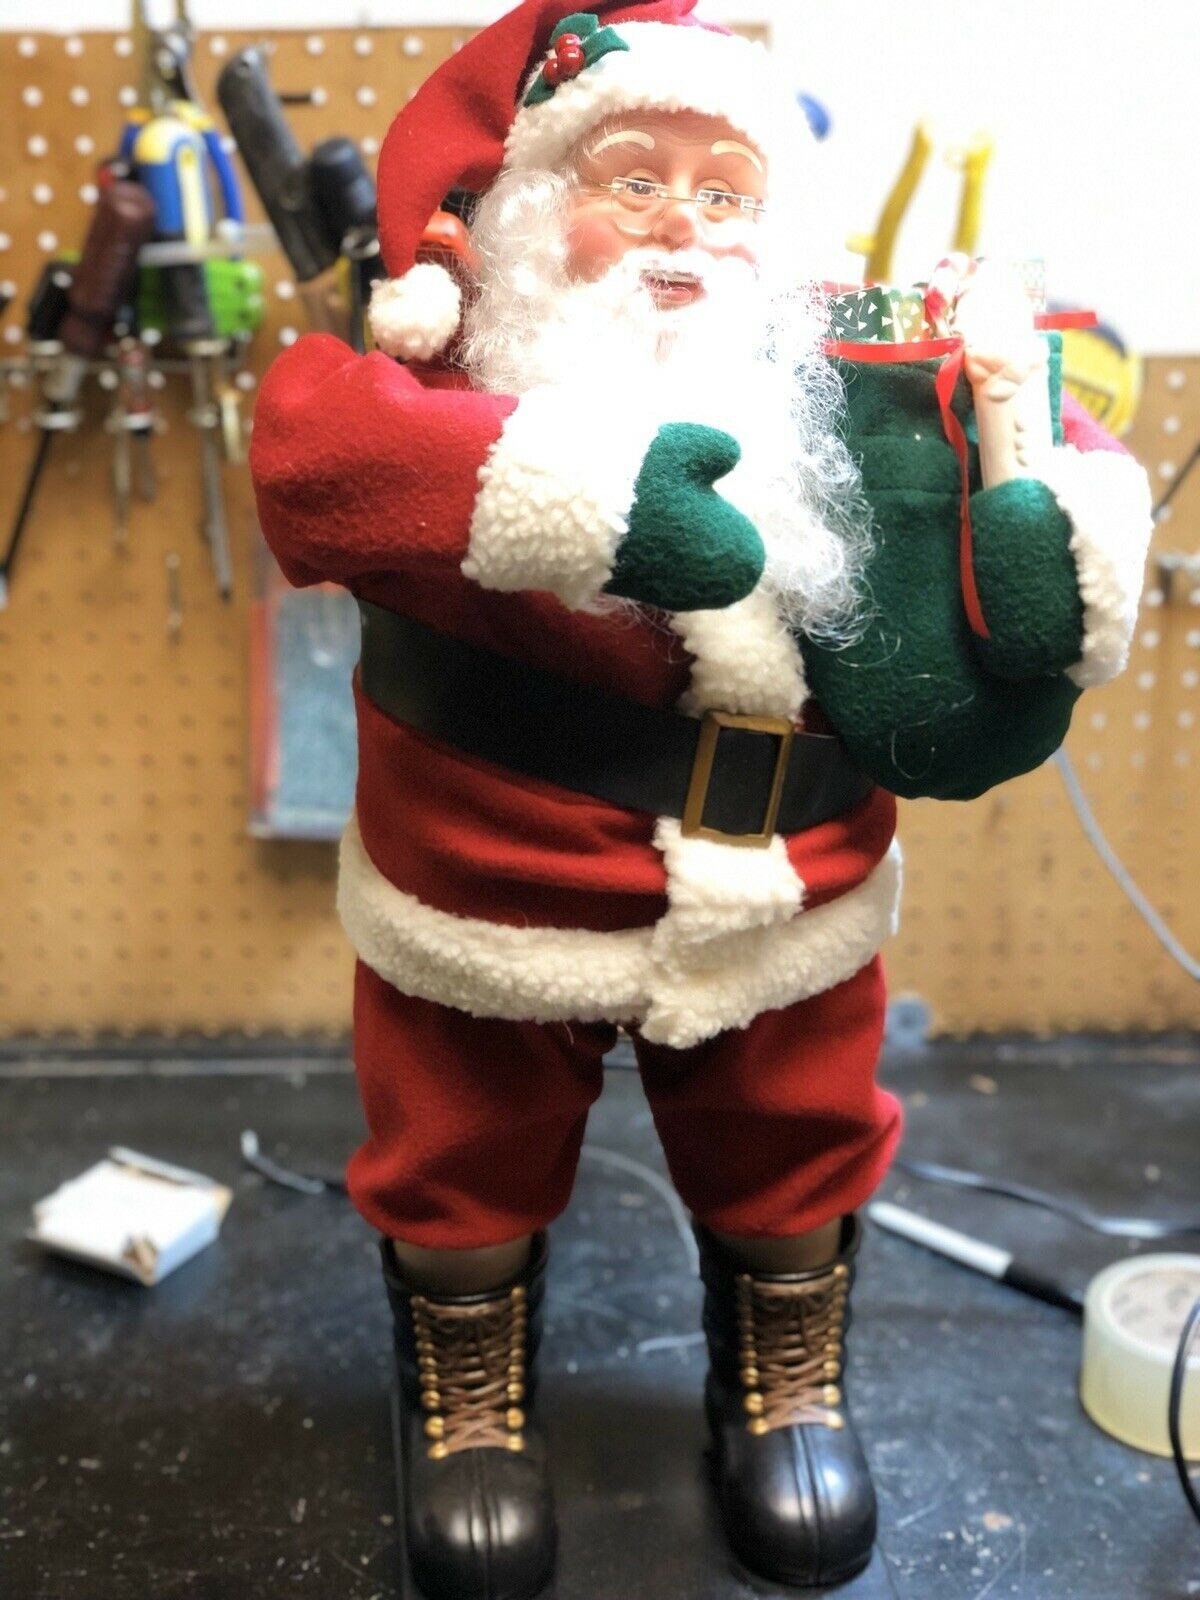 Large, animated Santa Claus figure